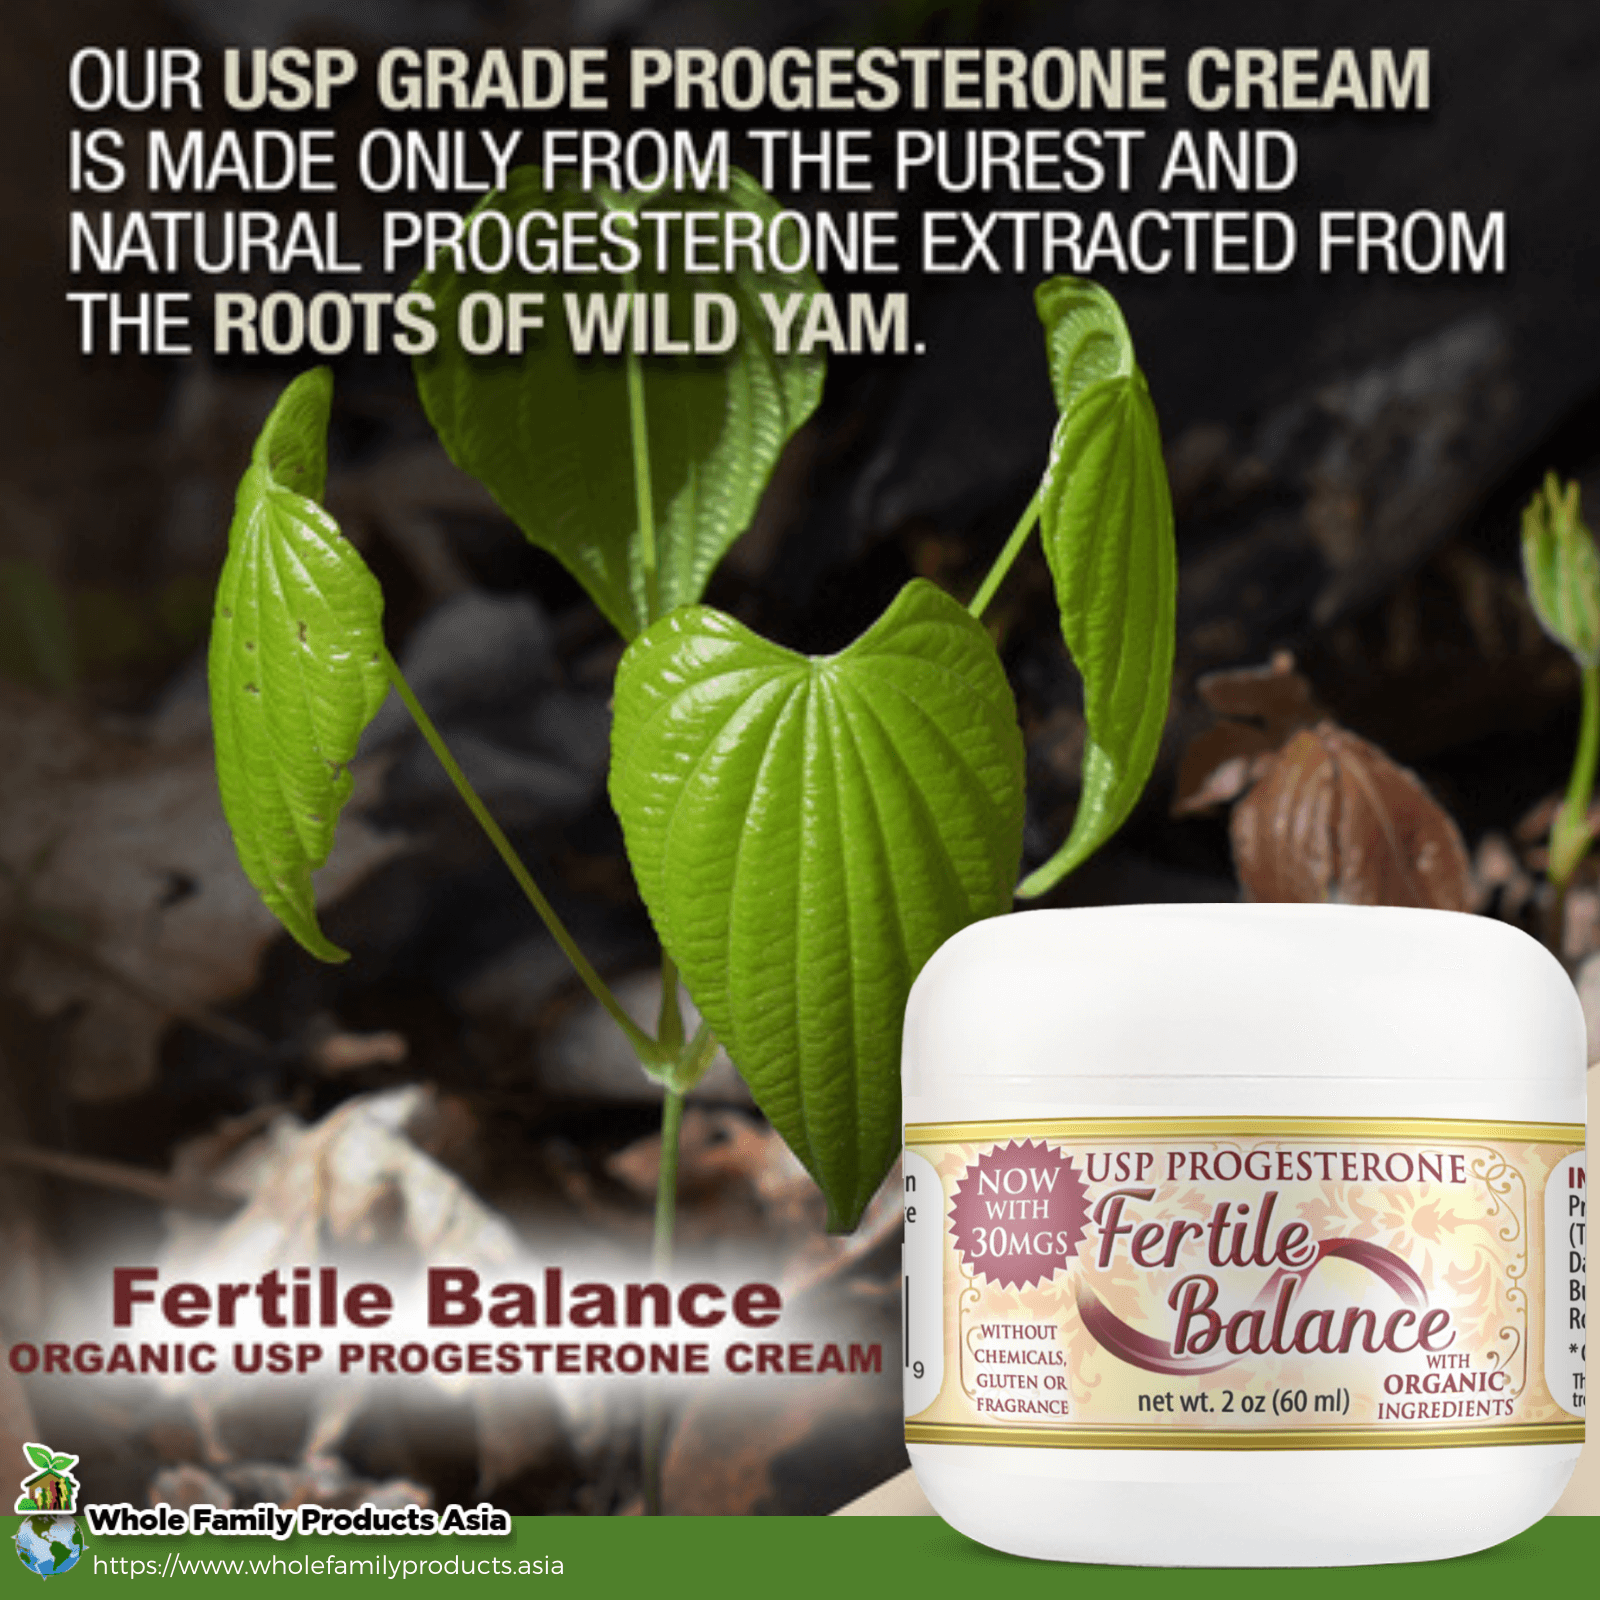 WFP Asia Fertile Balance Progesterone Cream Infographic